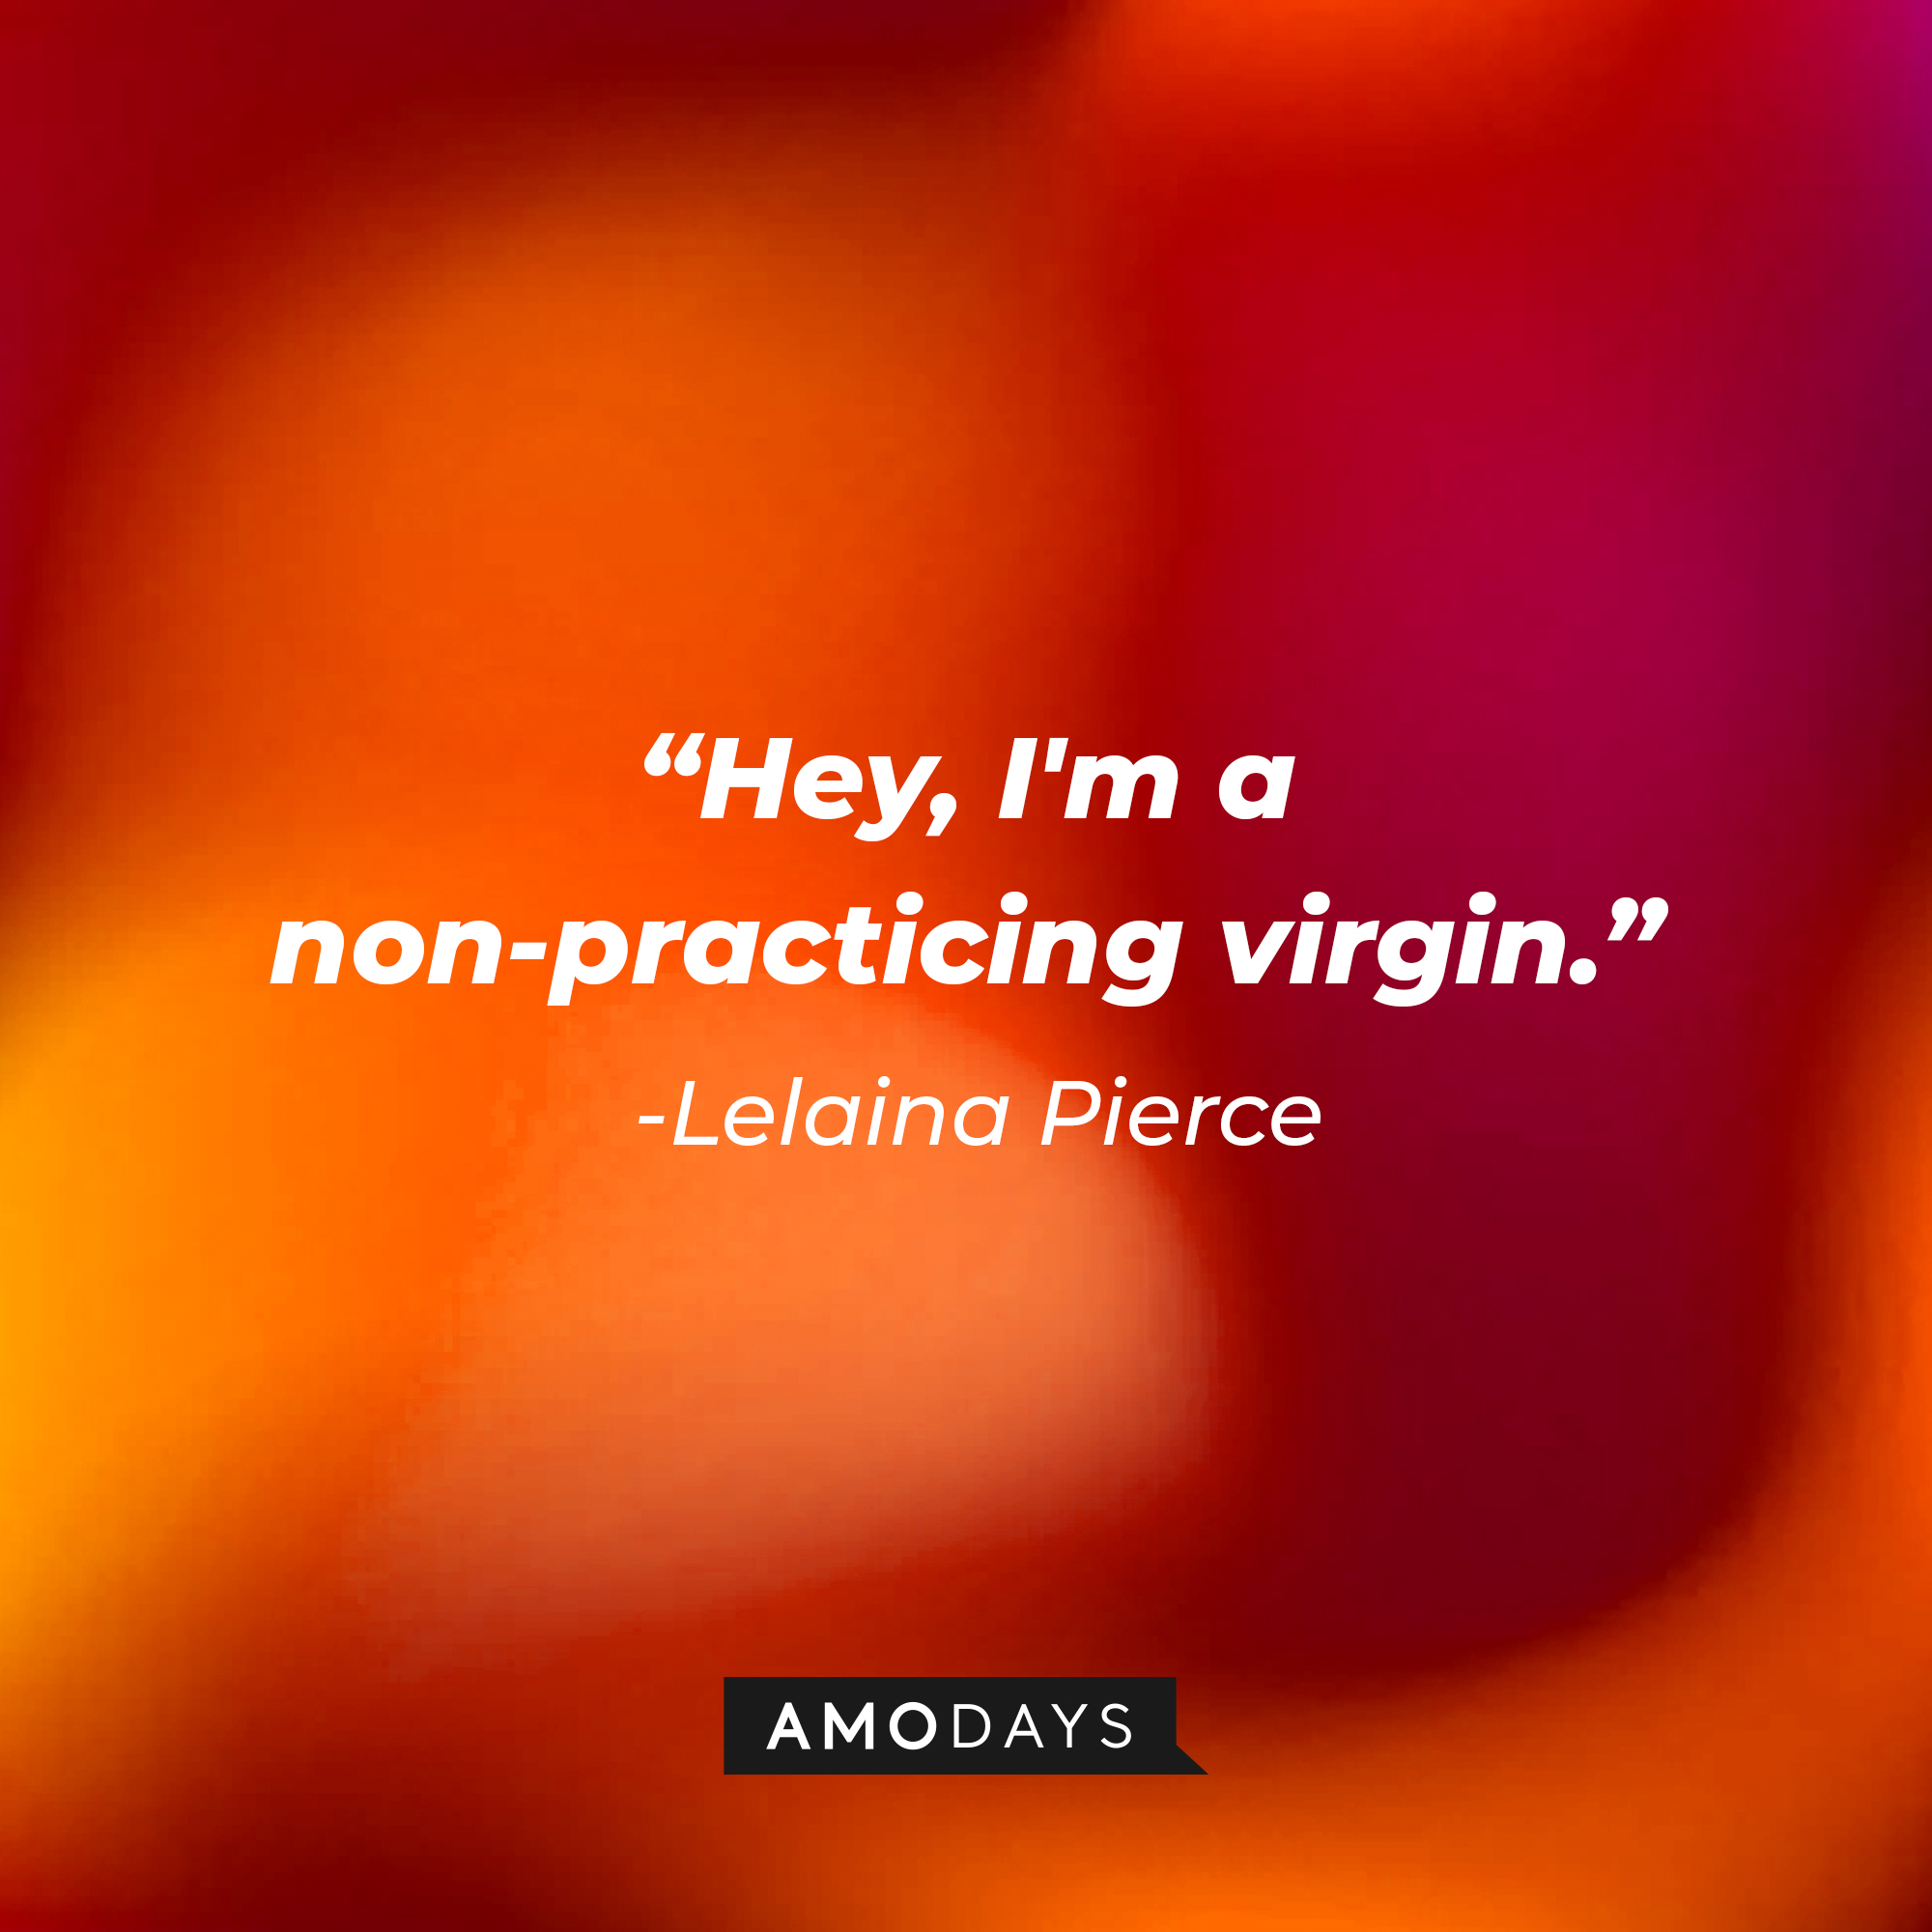 Lelaina Pierce’s quote: “Hey, I'm a non-practicing virgin." | Source: AmoDays